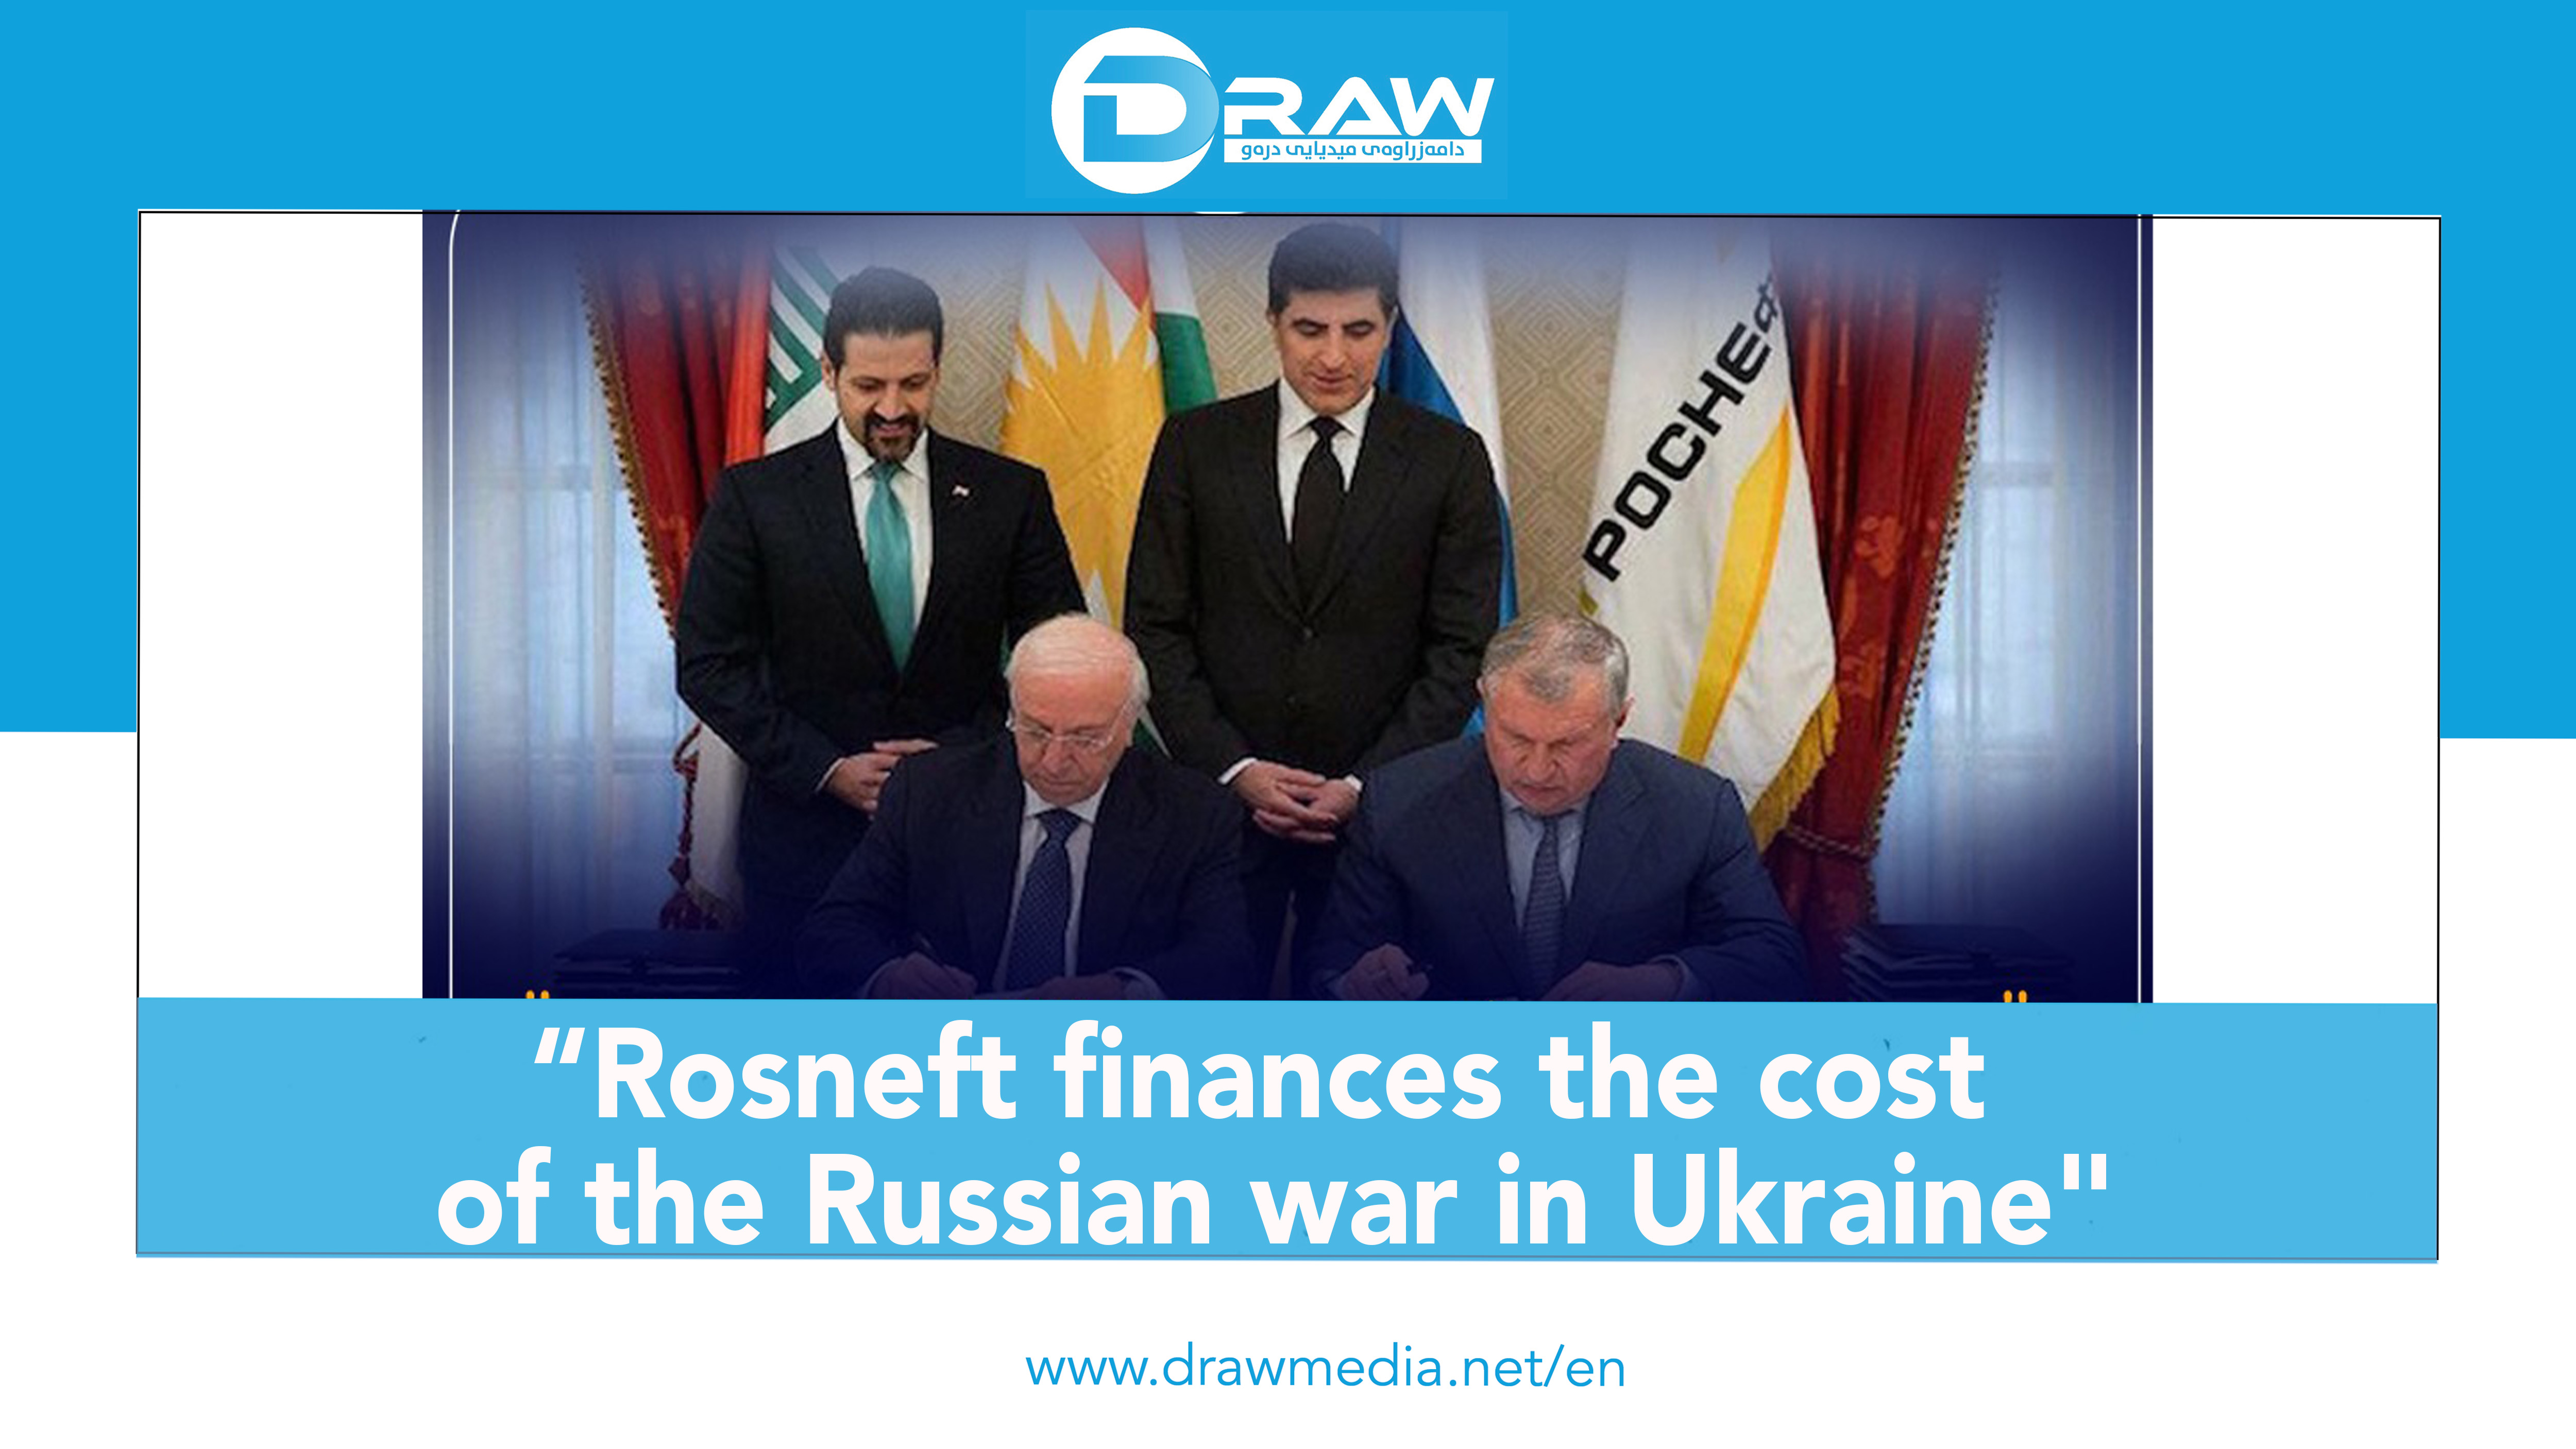 DrawMedia.net / “Rosneft finances the cost of the Russian war in Ukraine"